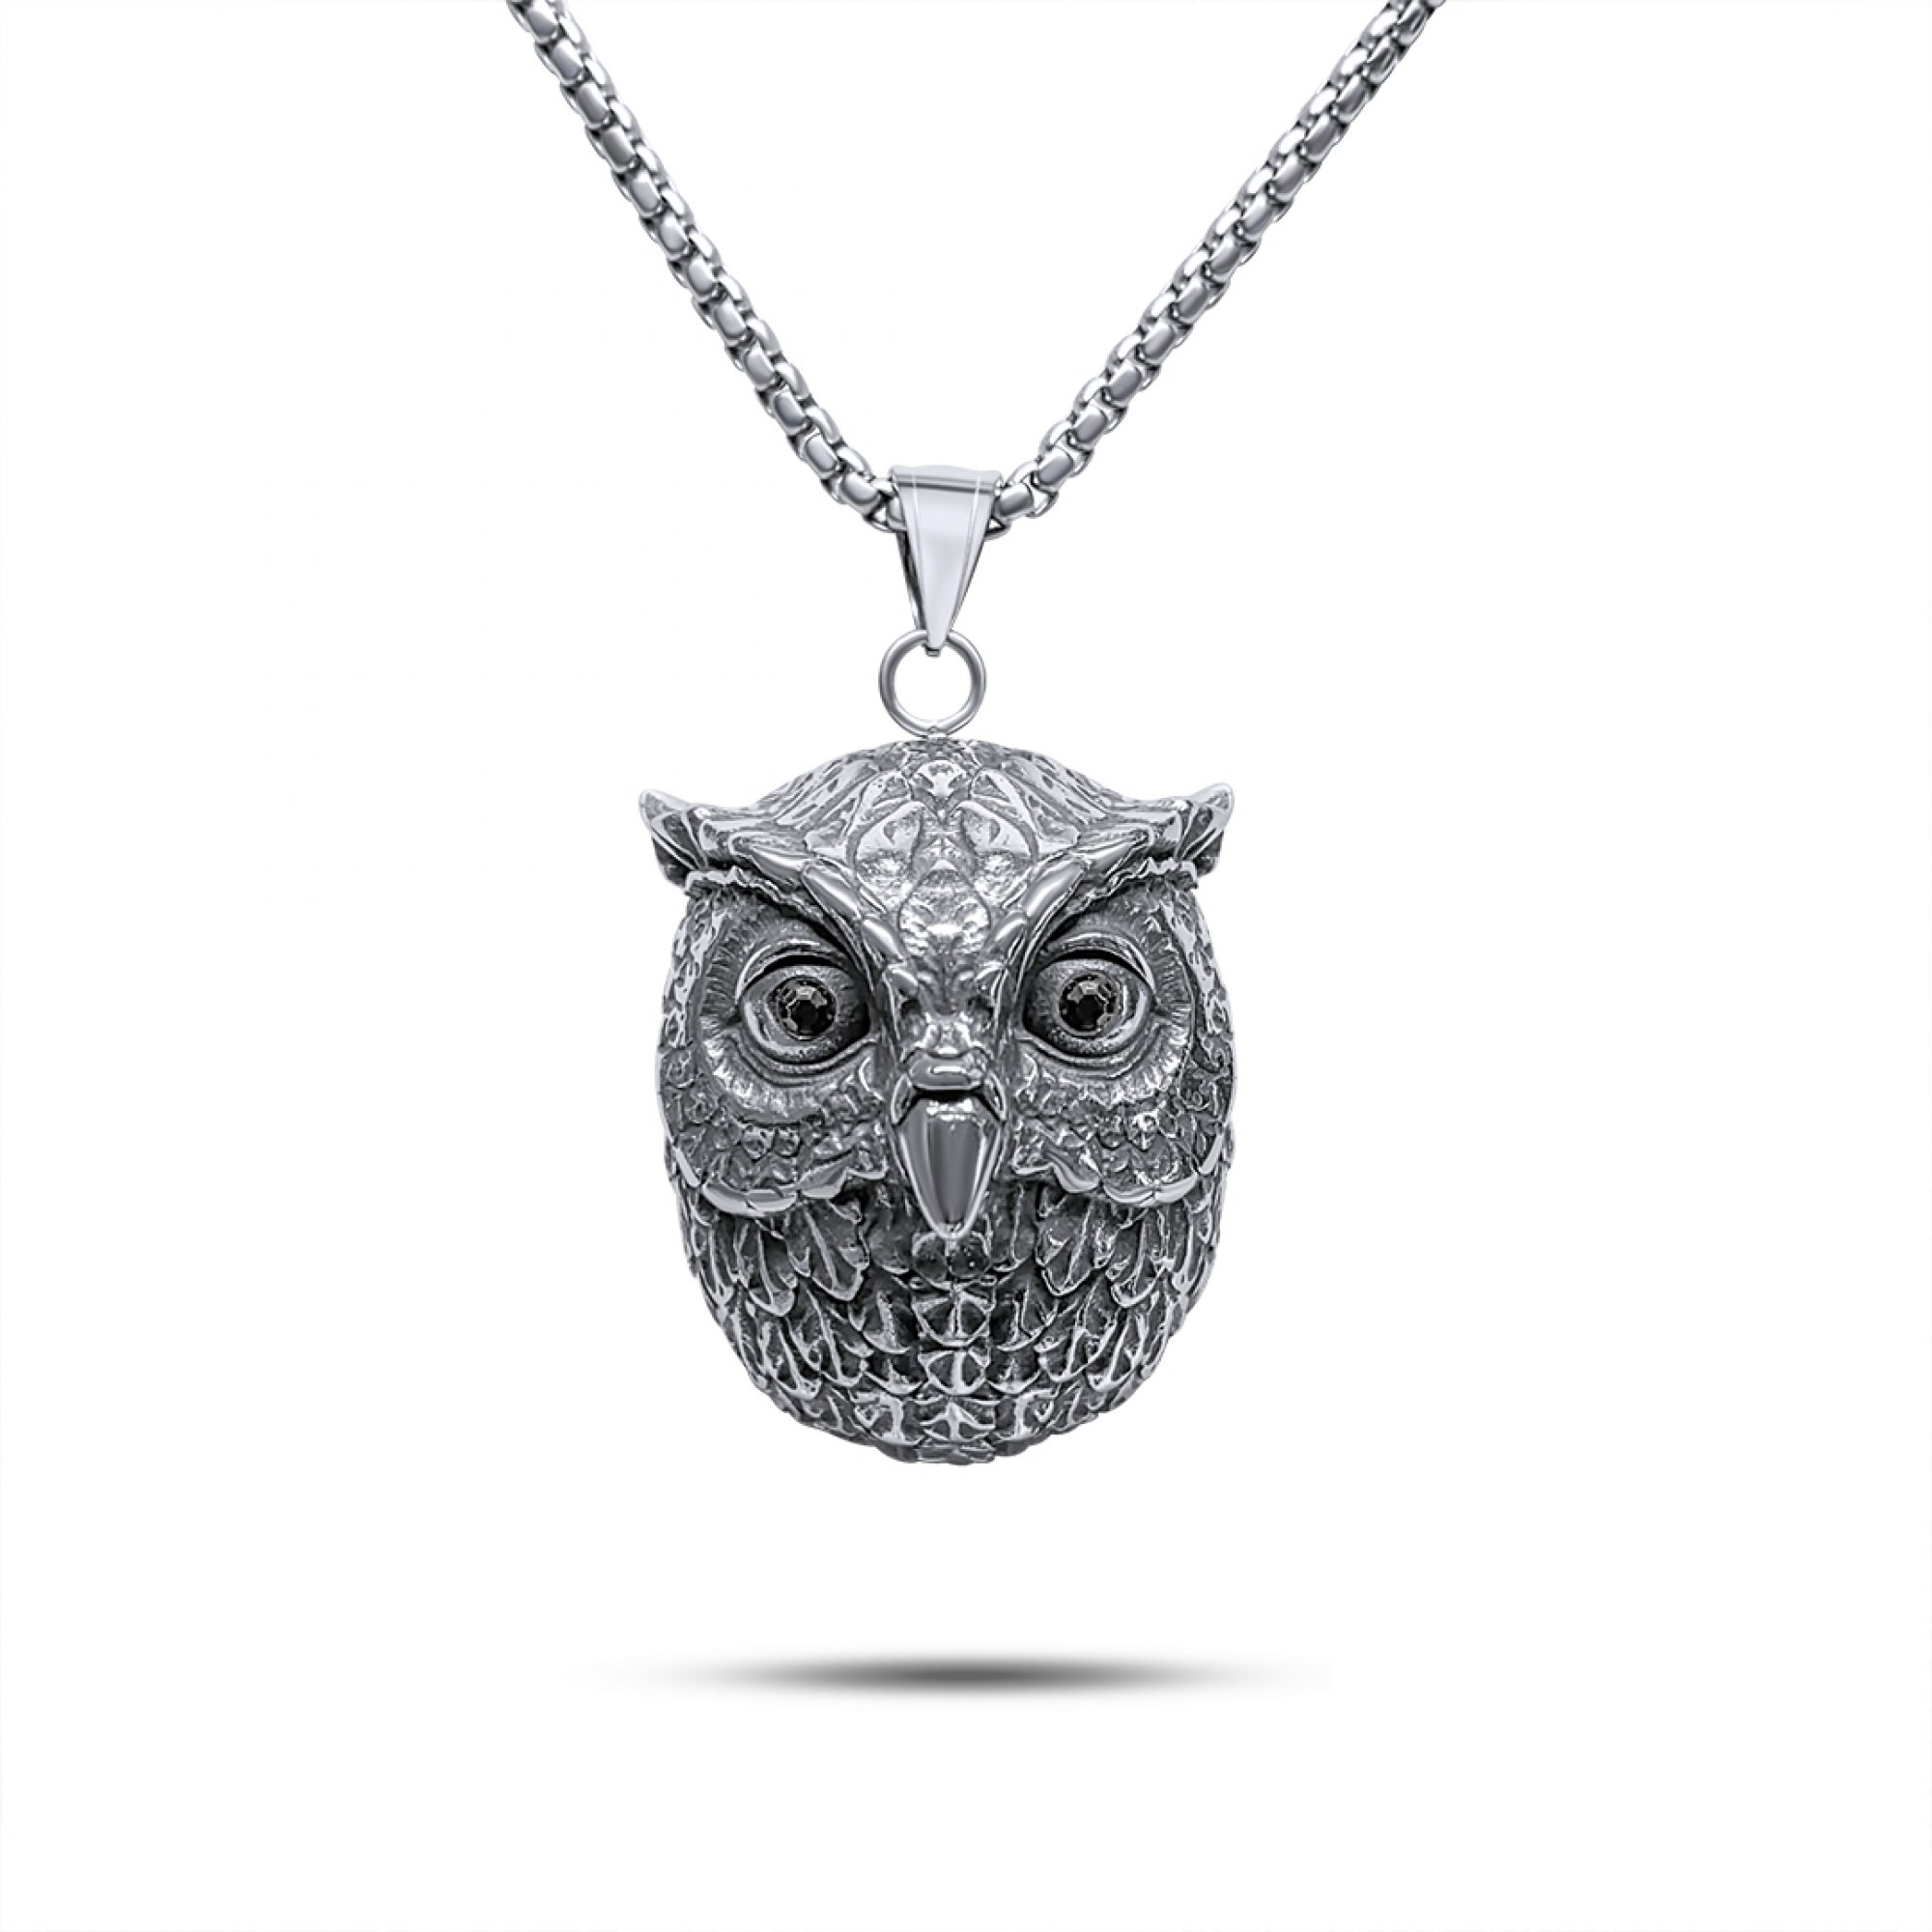 Steel owl necklace